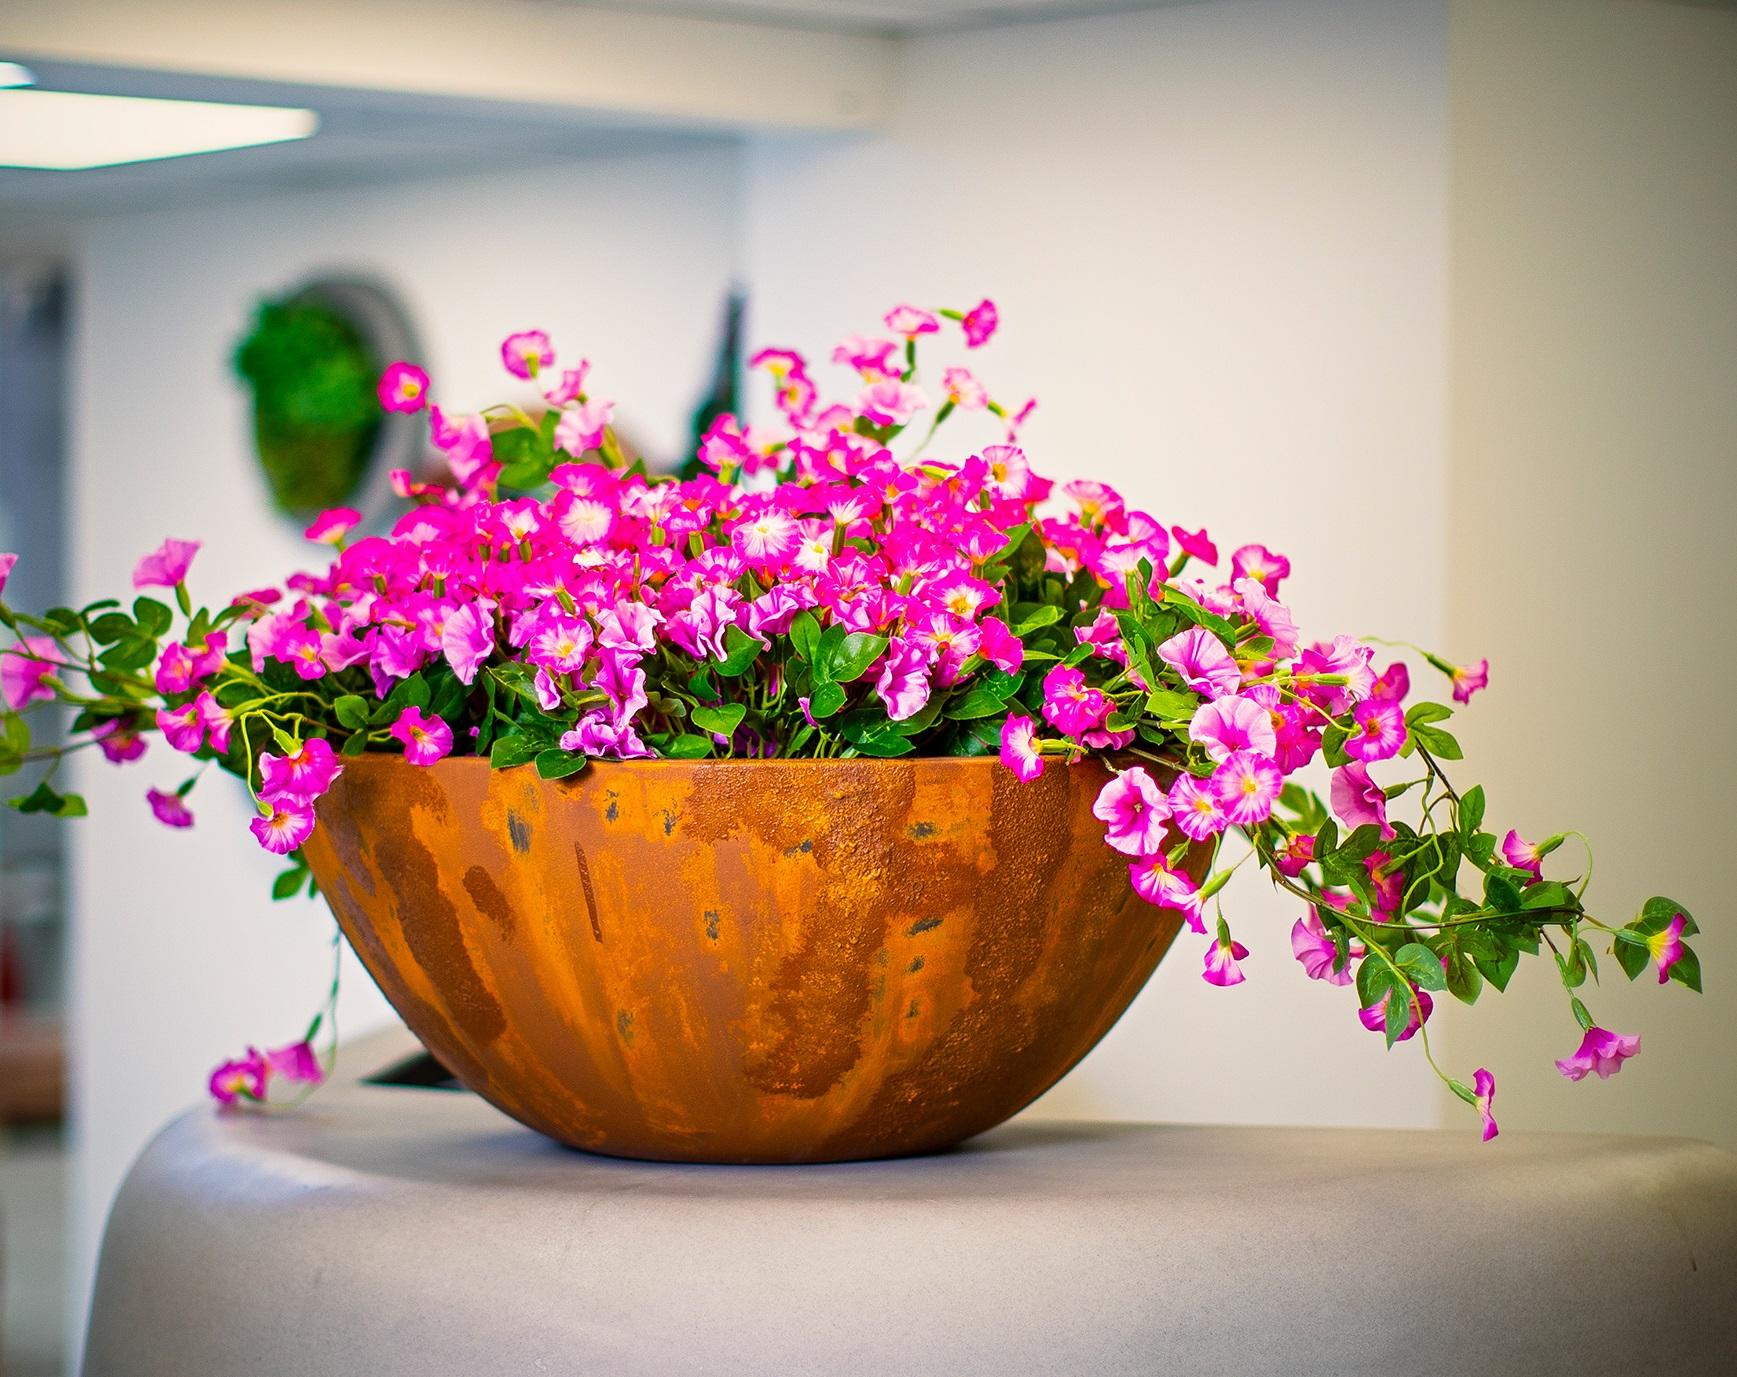 corten steel effect fibreglass garden bowl planter or water feature for outdoor and indoor use